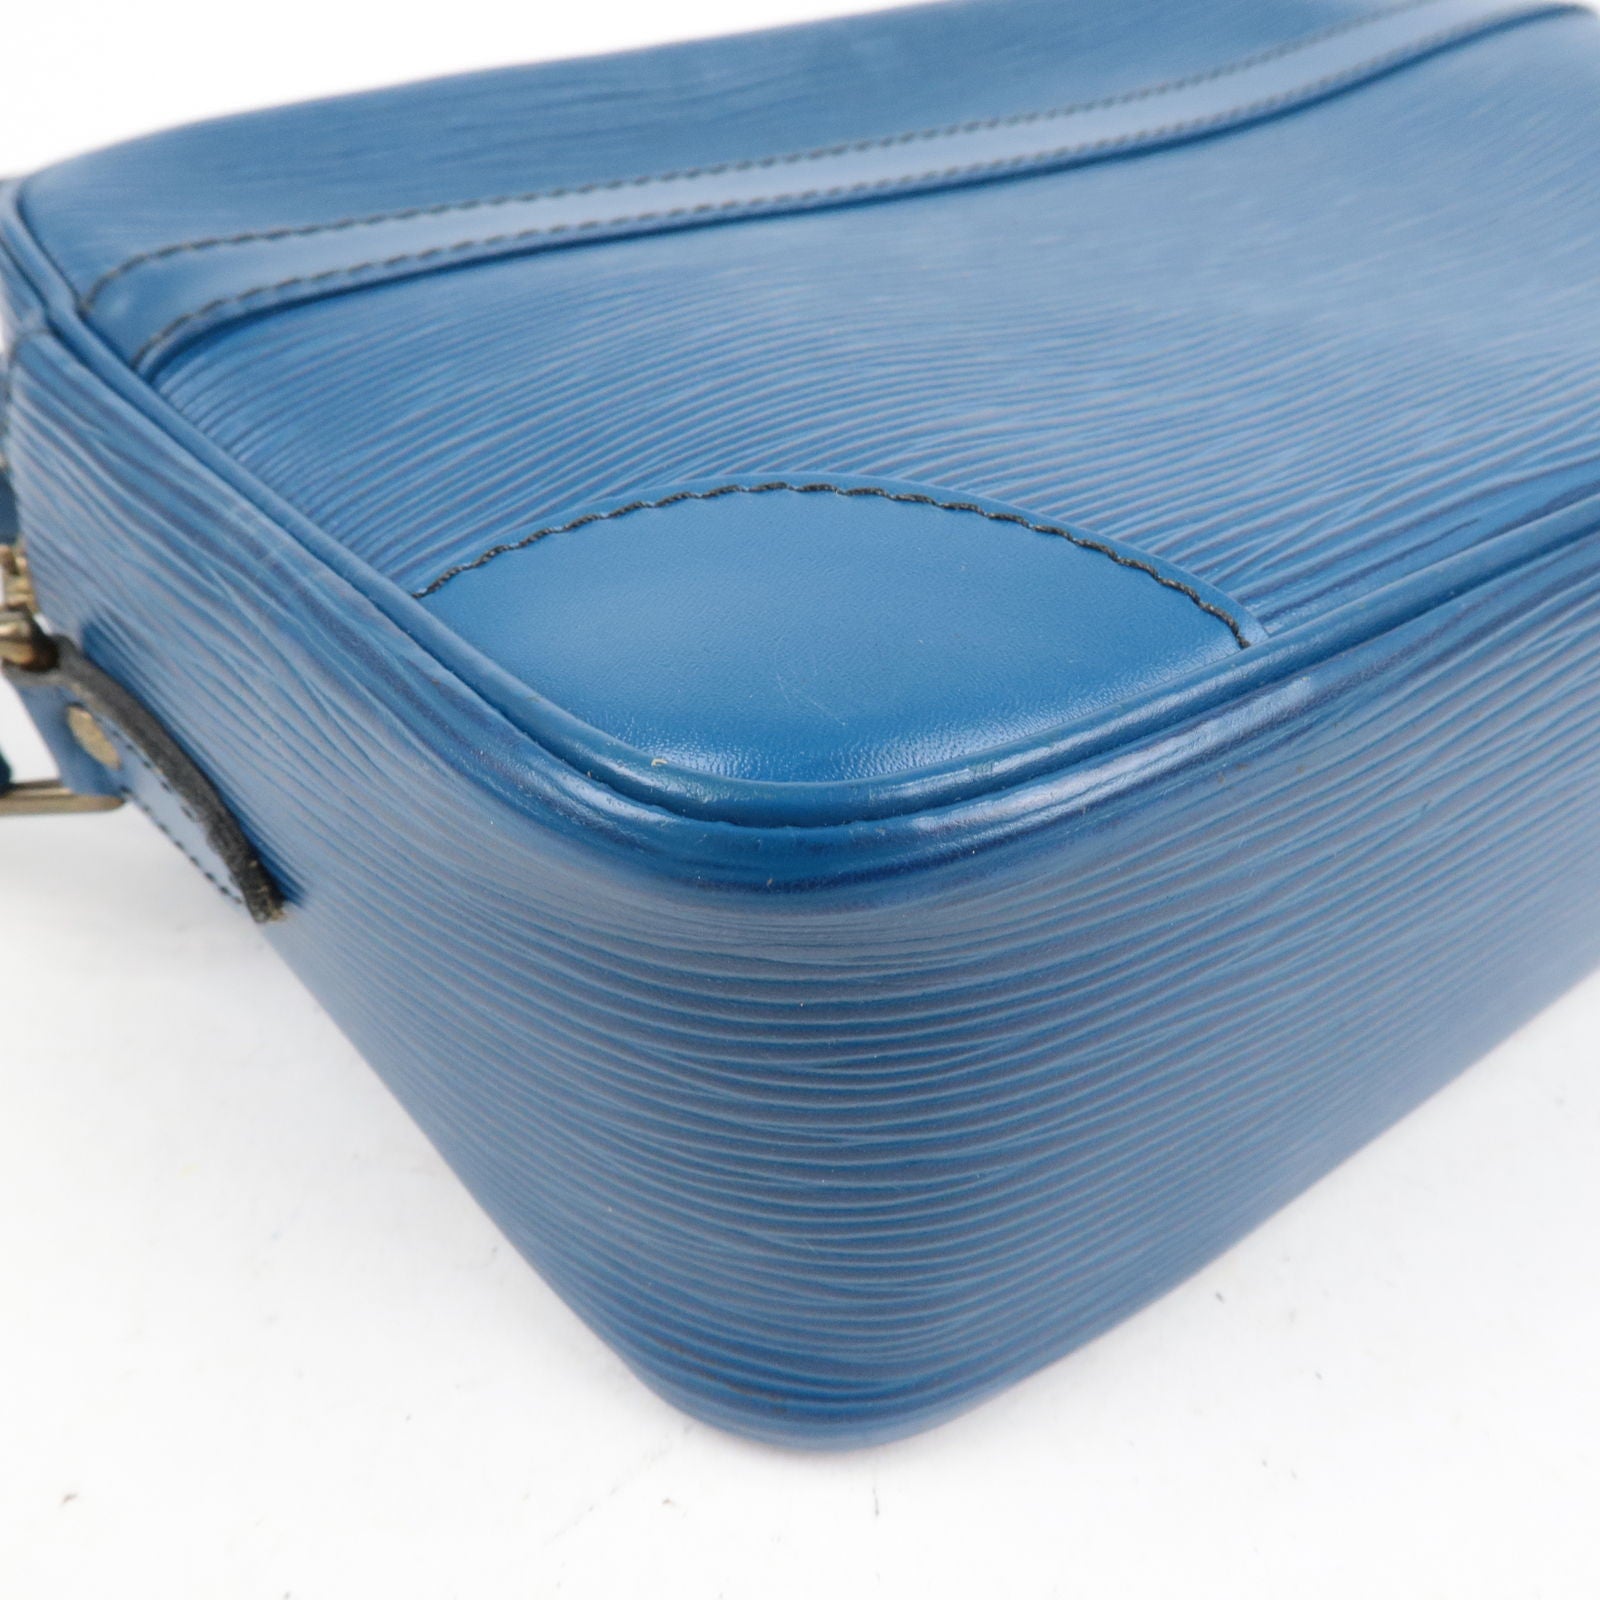 Louis Vuitton Blue Epi Leather Trocadero Handbag